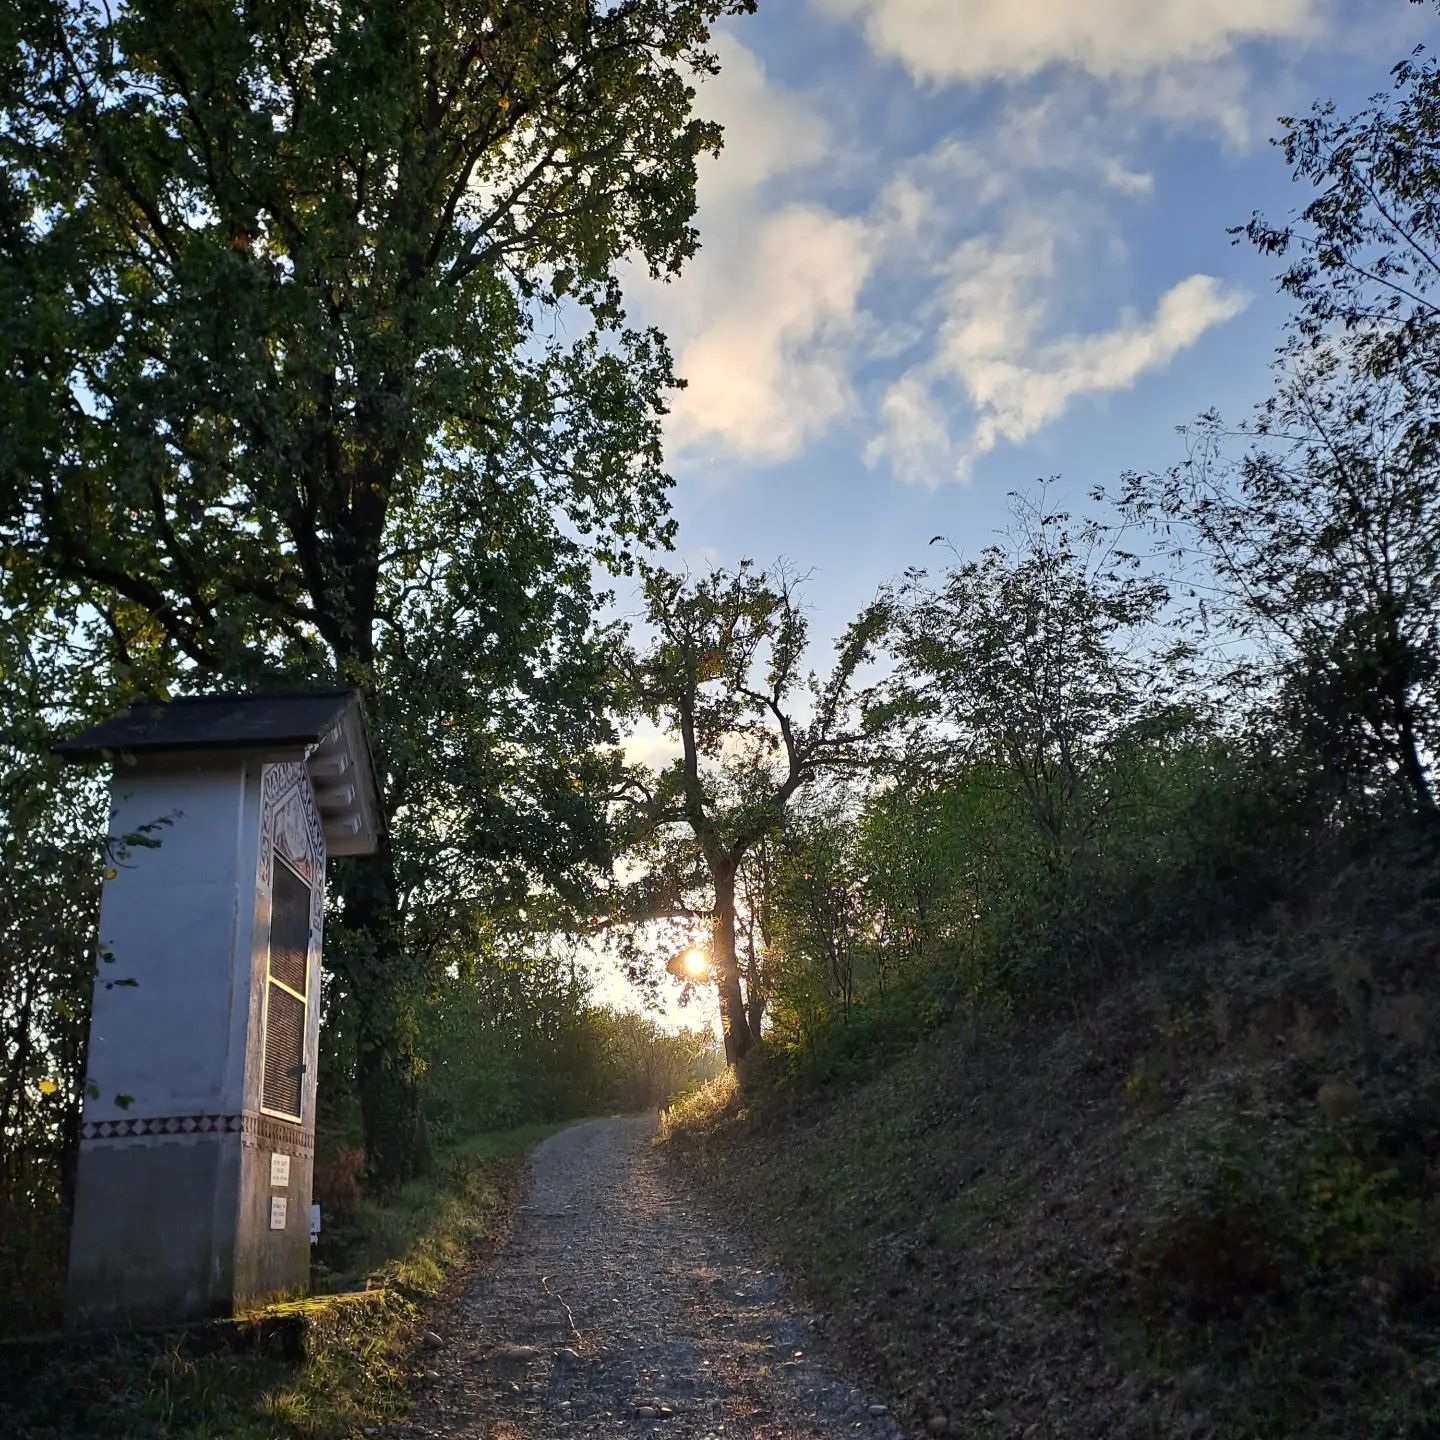 #landscapes #landscapephotography #canavese #moncrivello #autumnvibes🍁 #autunno #autumn #piedmont #piemonte #viveremoncrivello #italia #piemont #ピエモンテ #イタリア #italy #italien #italië #italie #vercelli #vercellese #moncravel